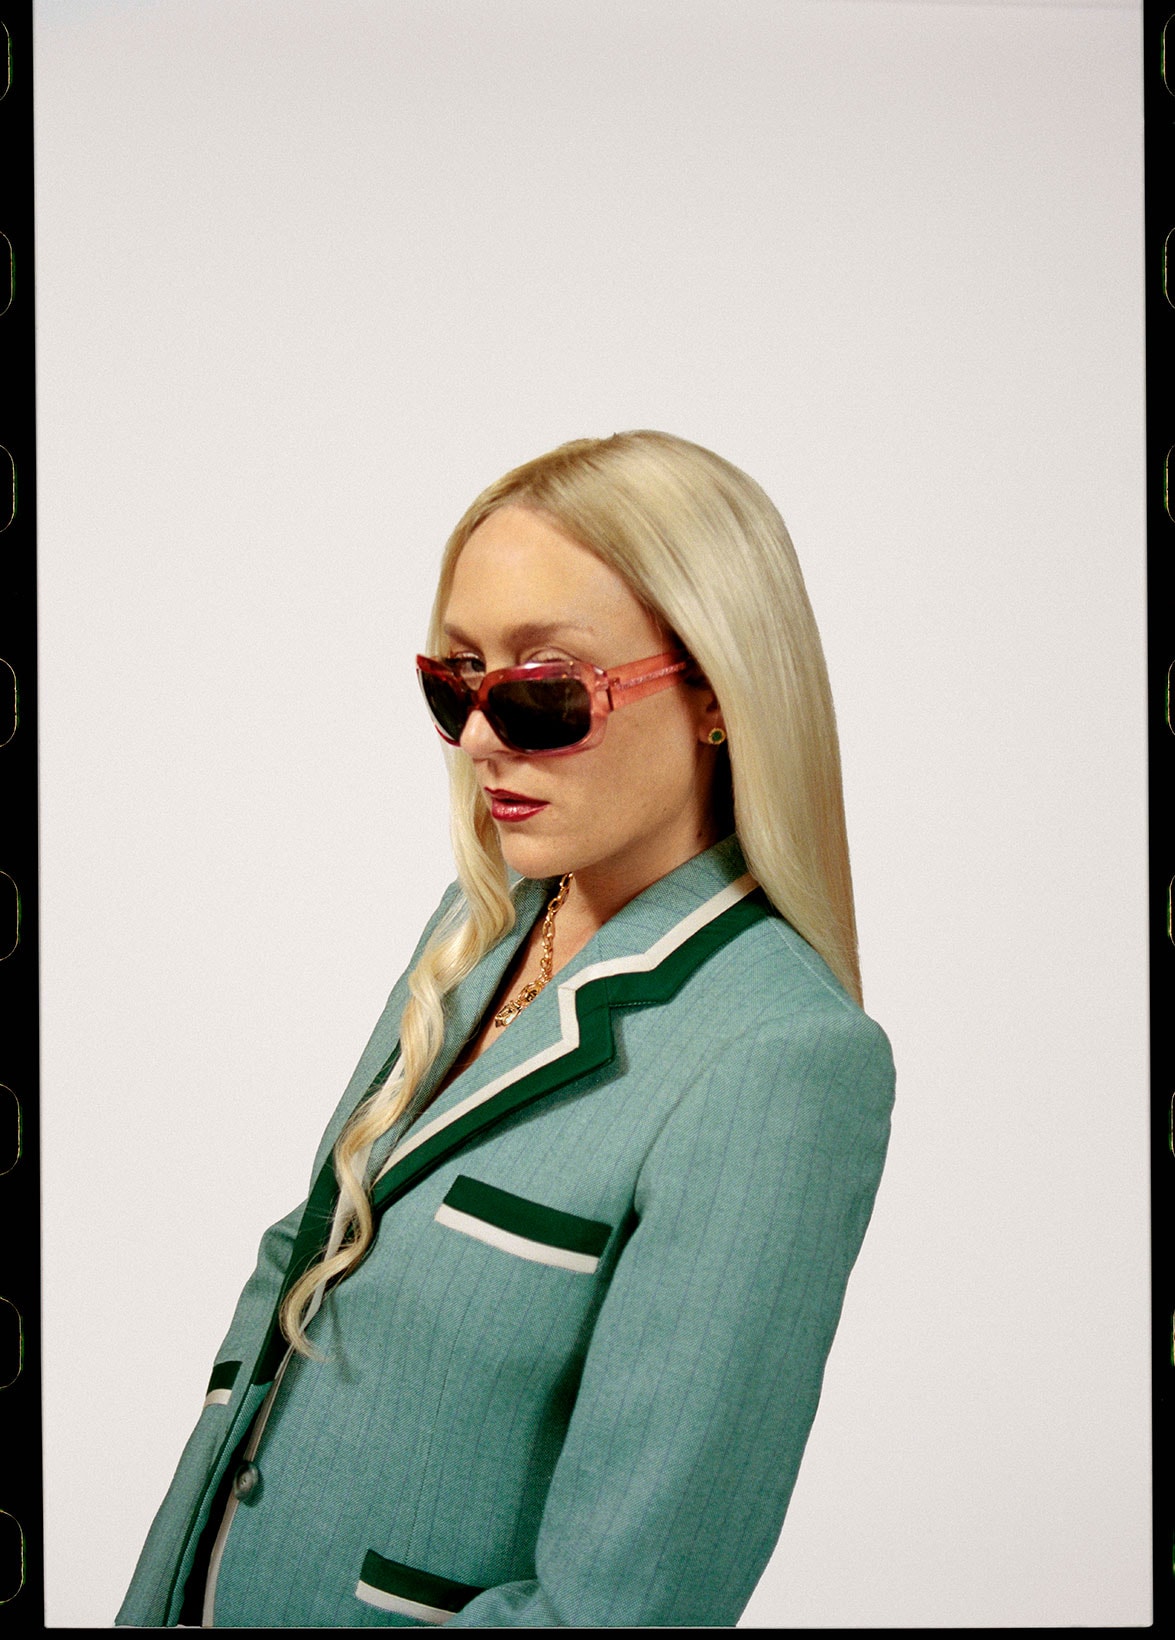 Marc Jacobs Chloë Sevigny Resort Campaign NYC Headquarters Office Sunglasses jacket